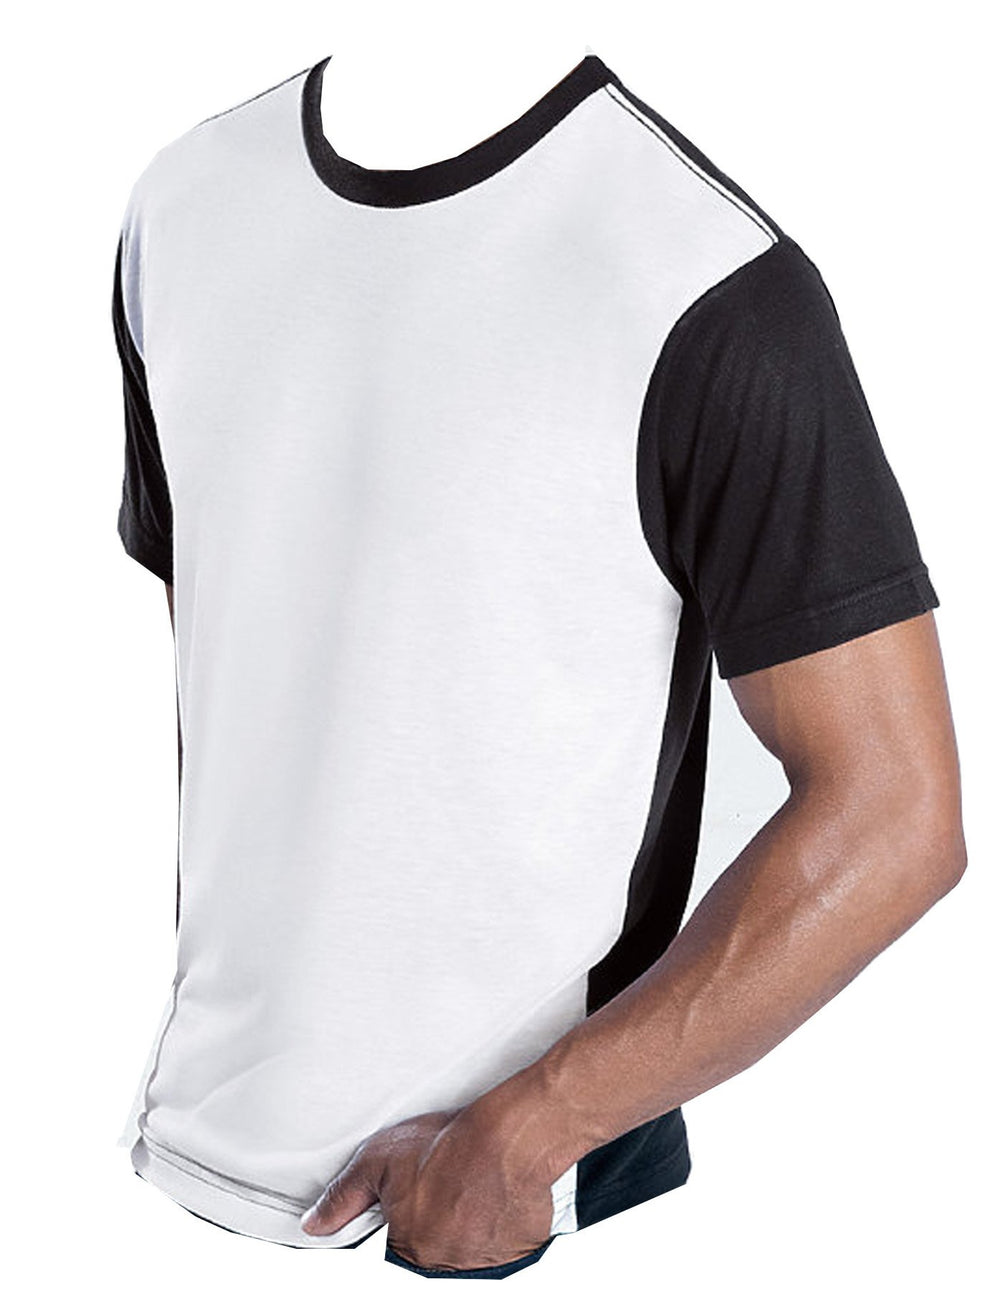 Adult Blackout T-Shirt -1902- Short Sleeve - BY SUBLIVIE